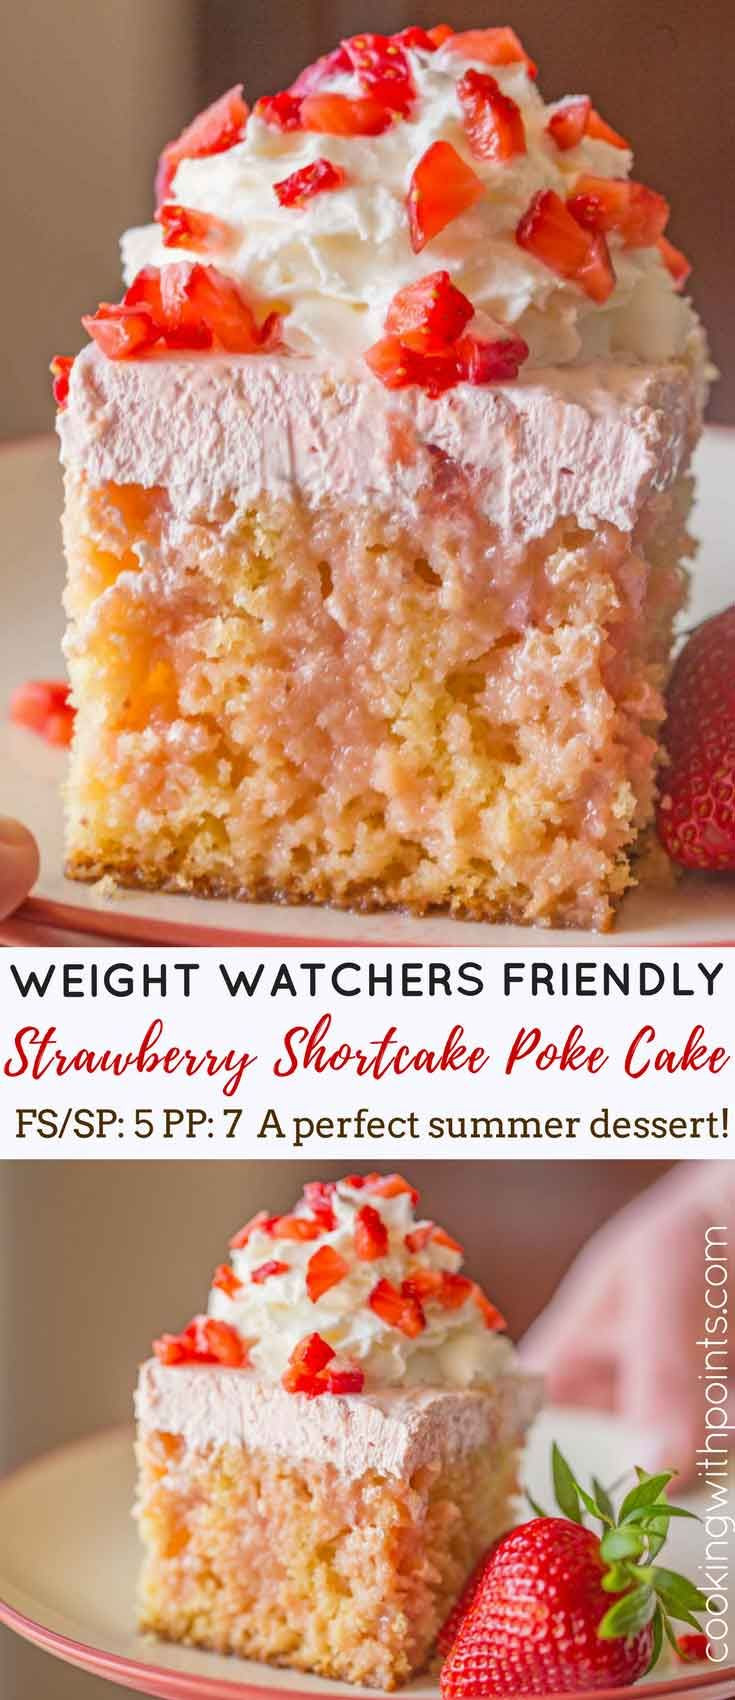 Weight Watchers Strawberry Shortcake
 Weight Watchers friendly Strawberry Shortcake Poke Cake